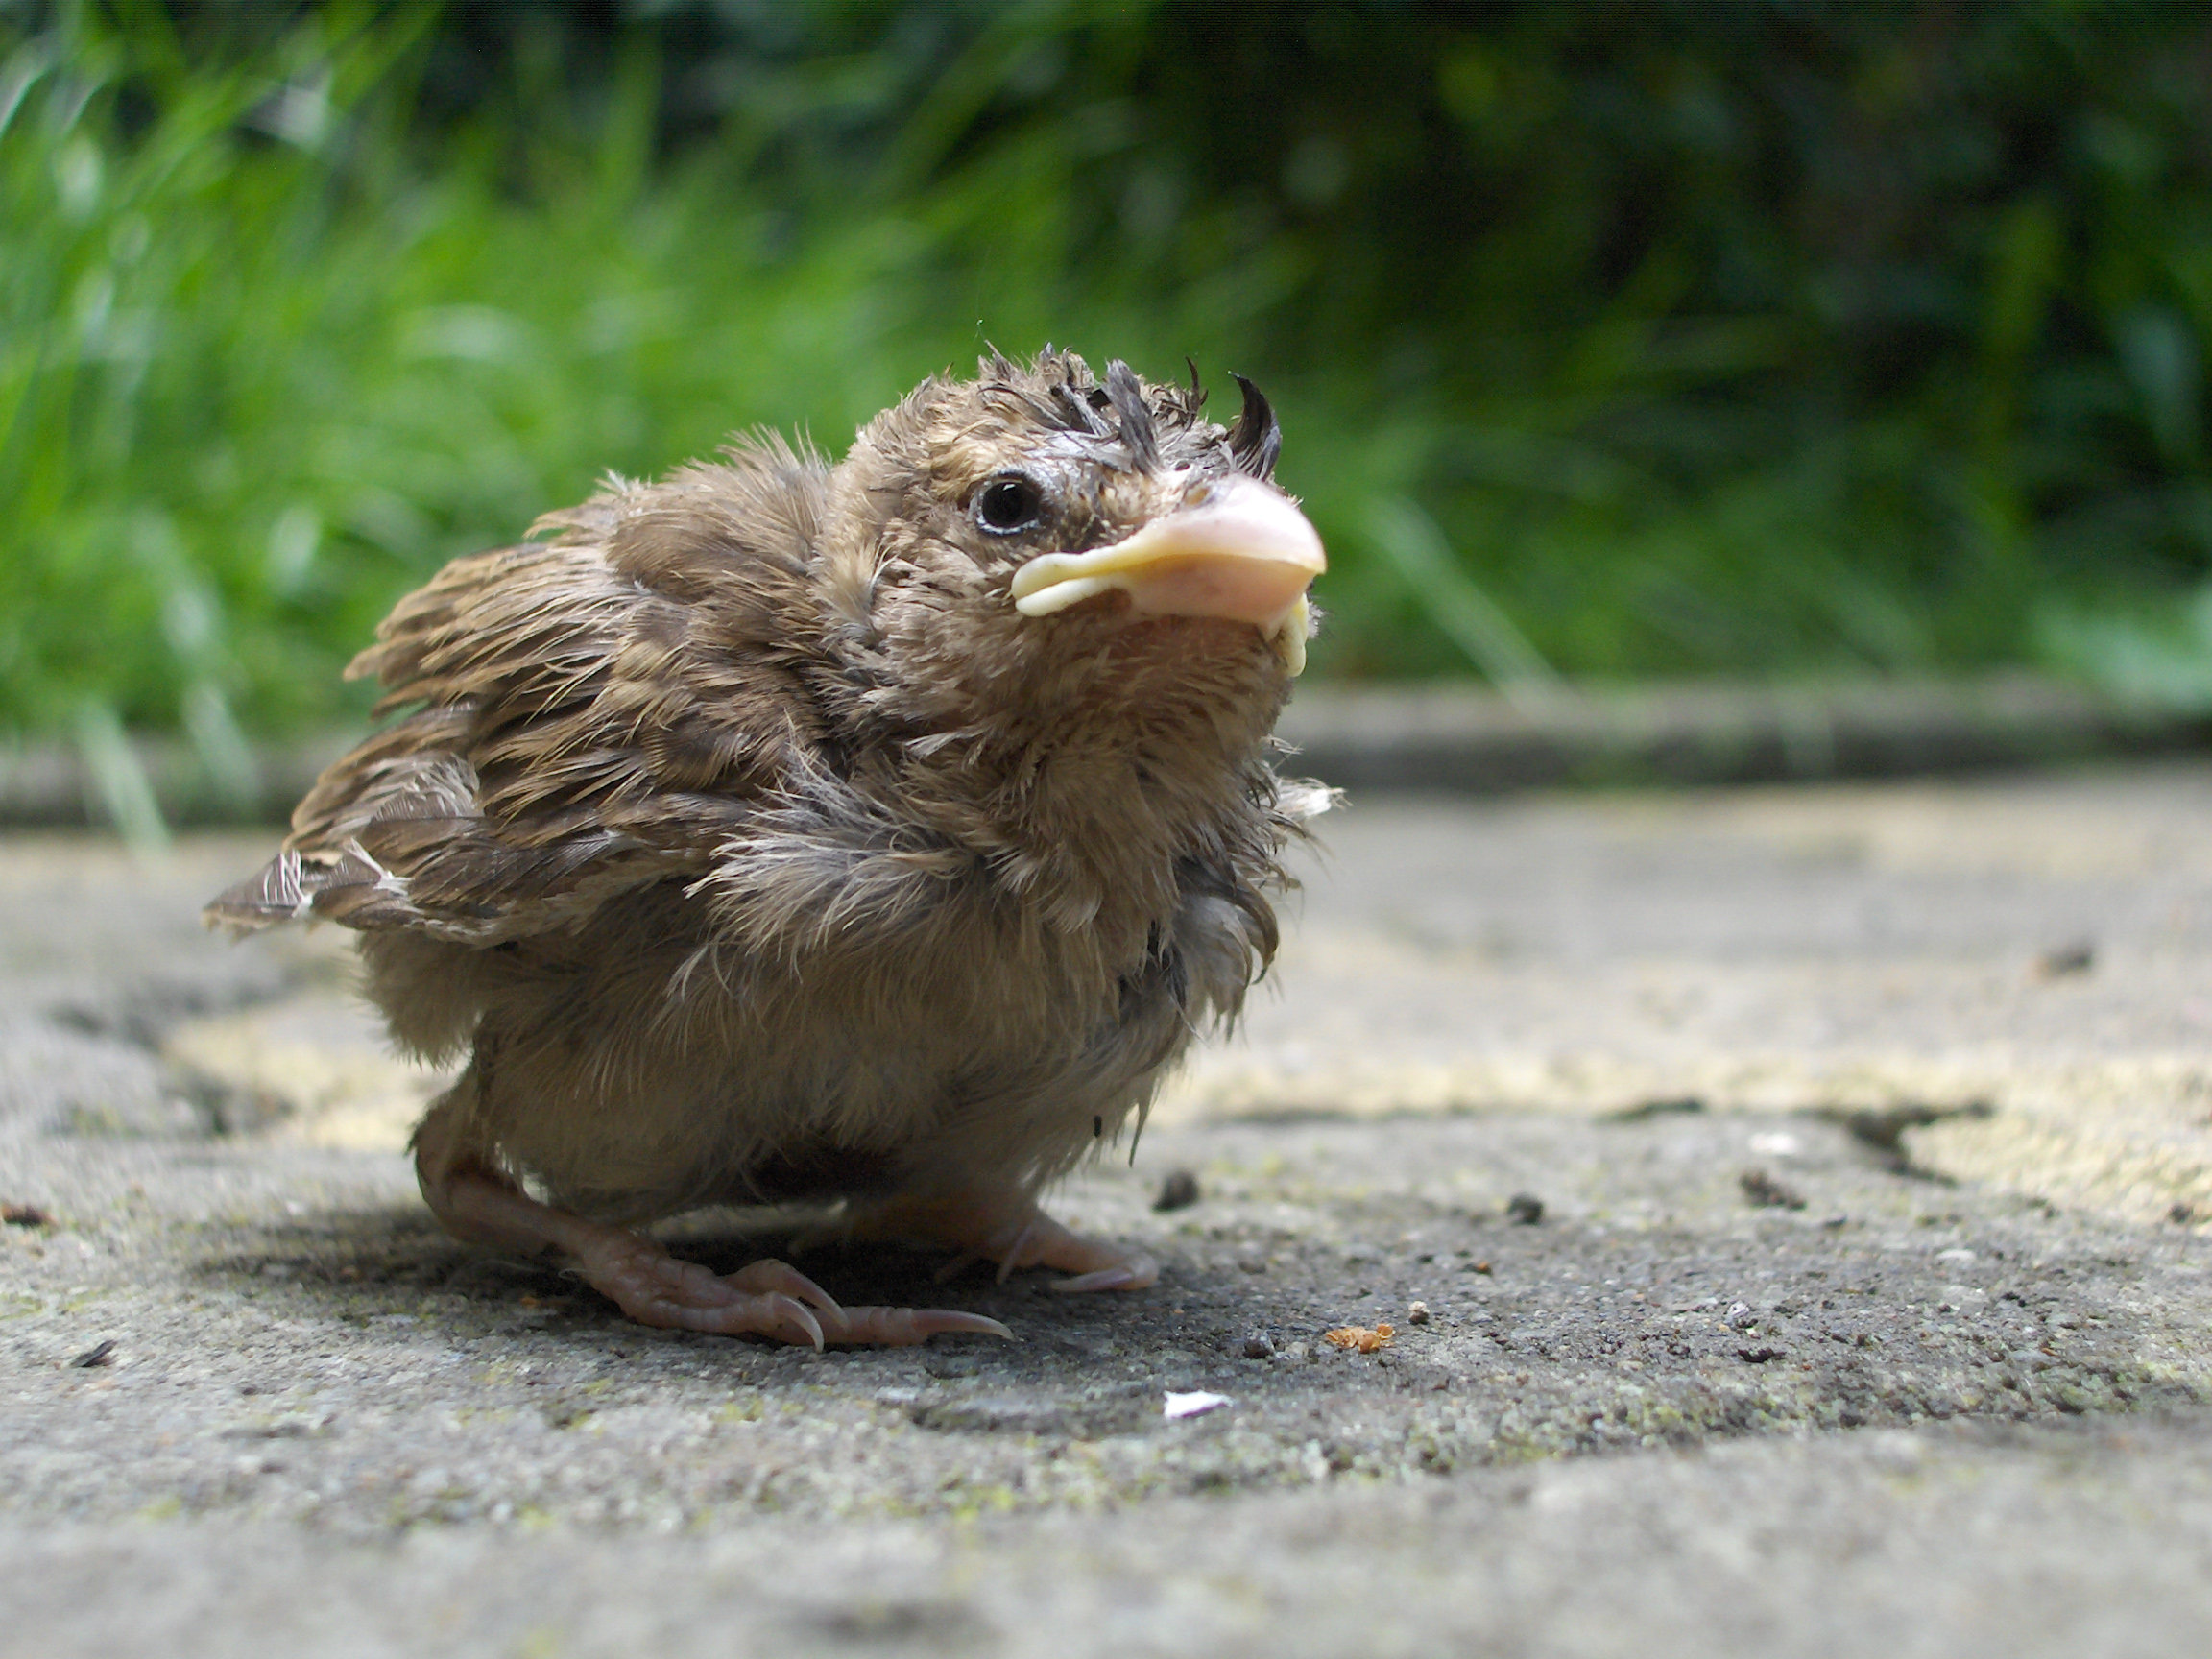 Sparrow chick photo